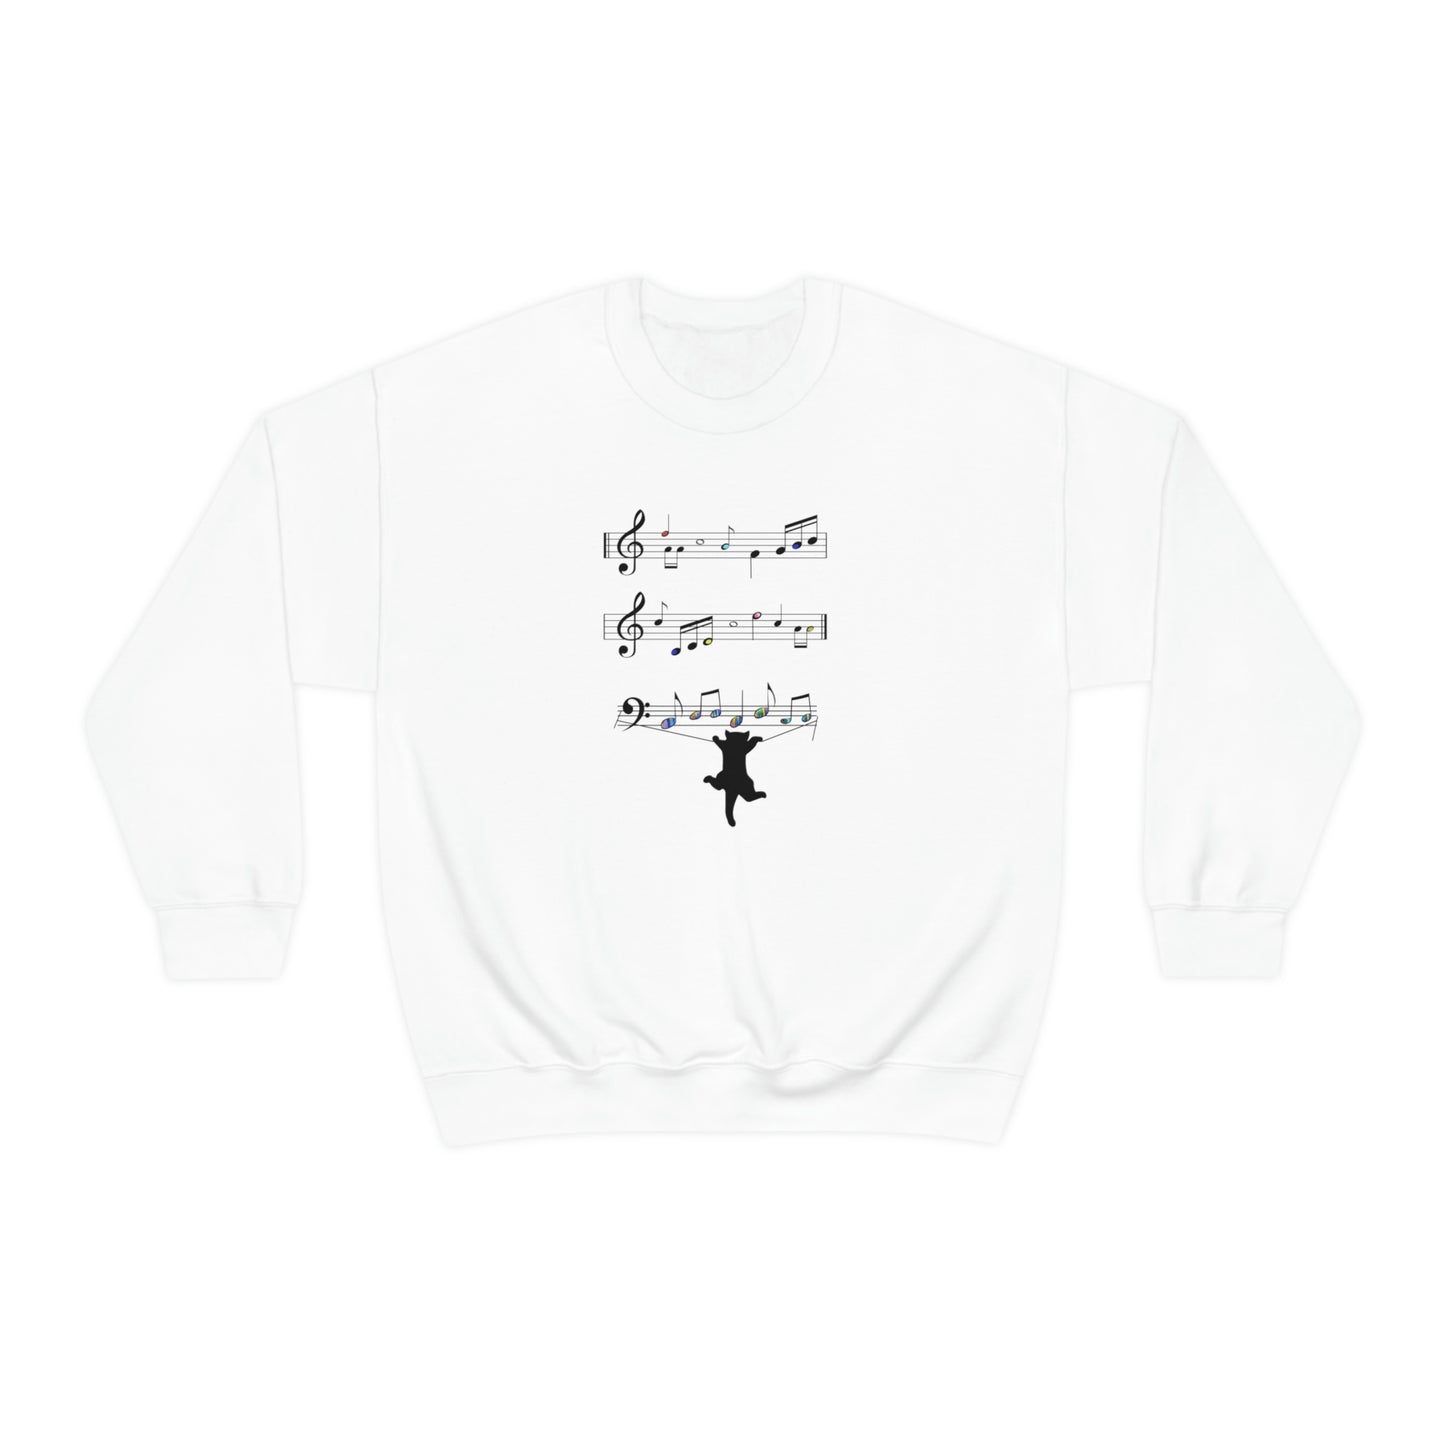 Musical Cat Sweatshirt